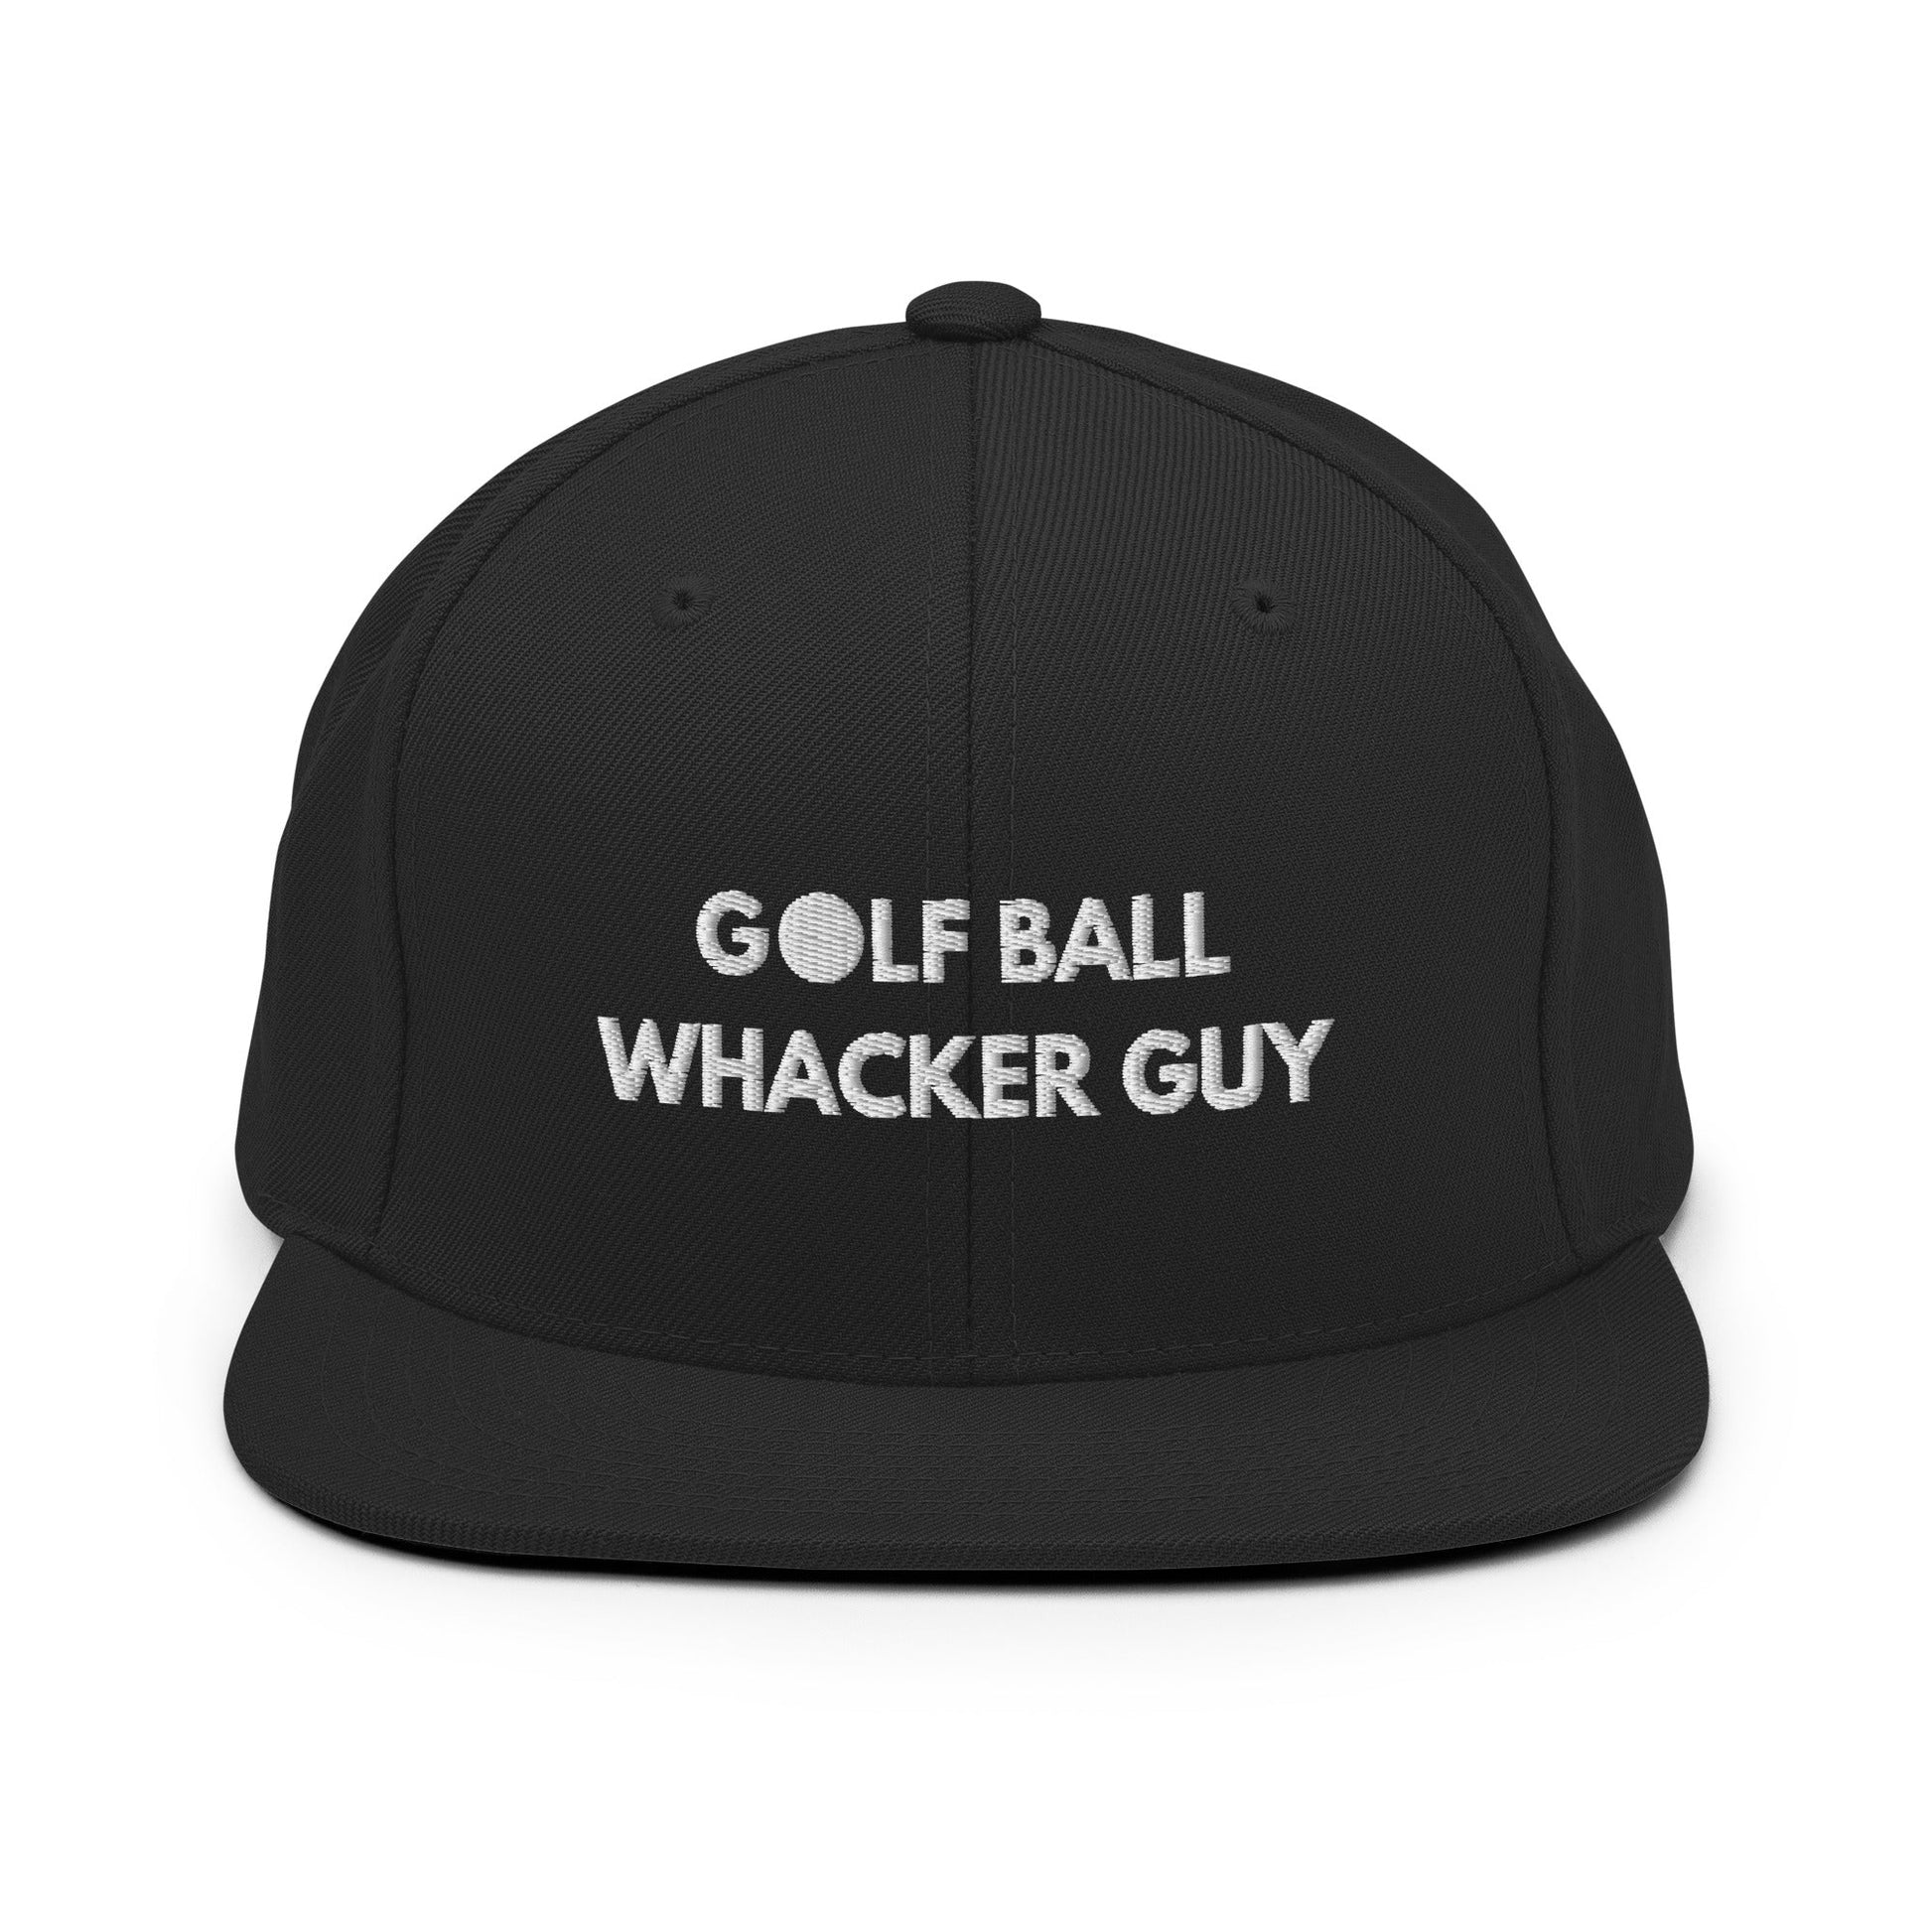 Funny Golfer Gifts  Snapback Hat Black Golf Ball Whacker Guy Hat Snapback Hat